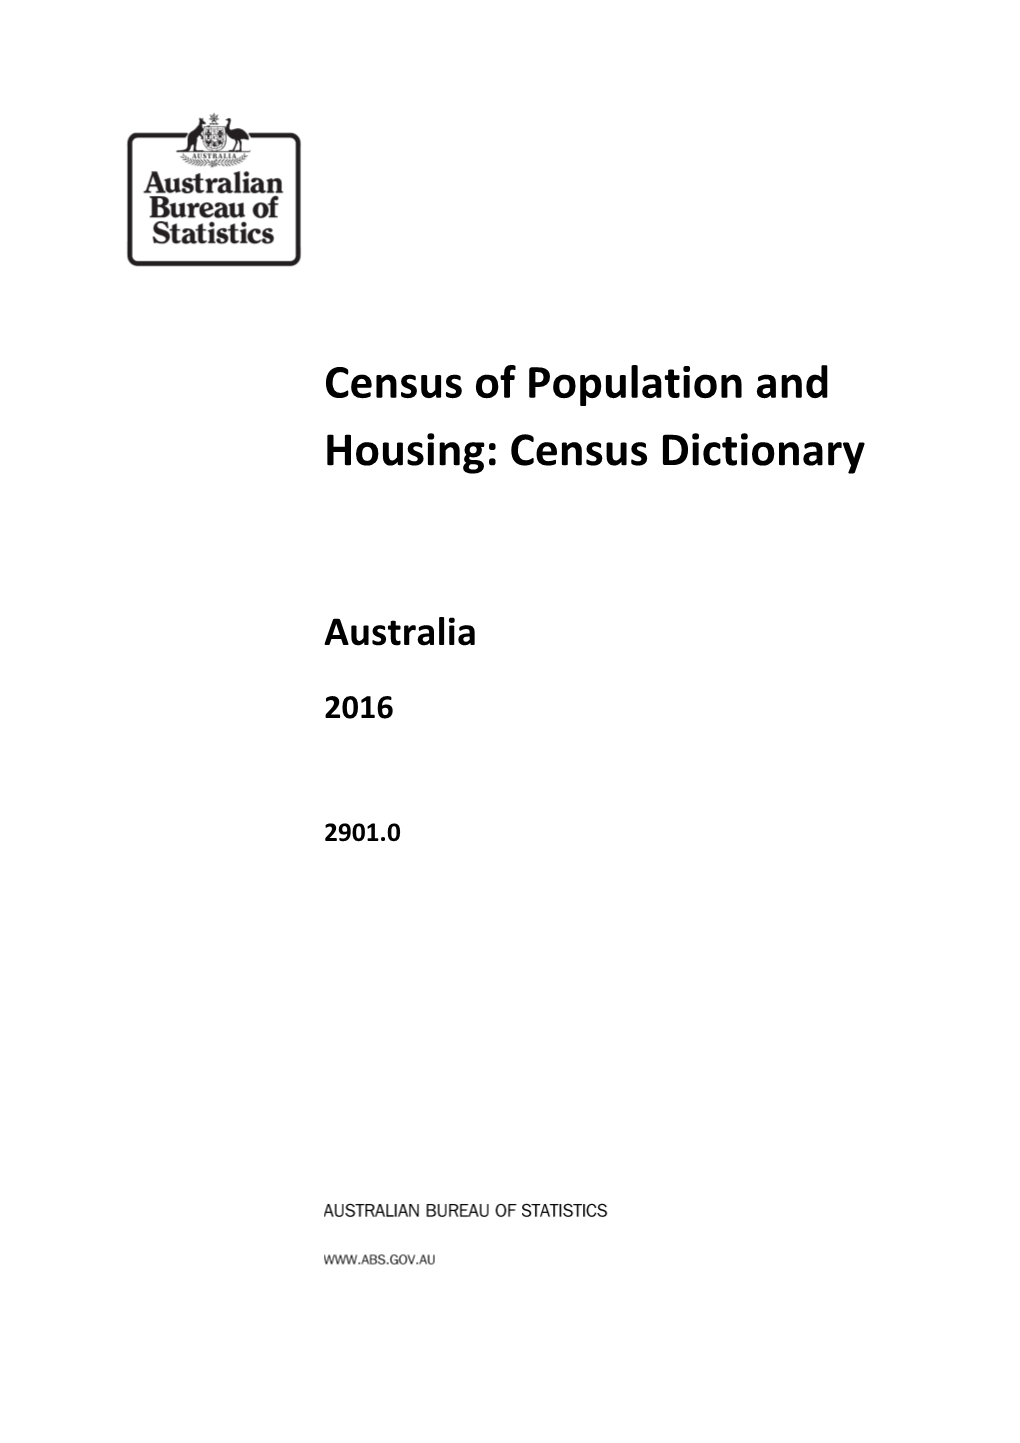 Census Dictionary